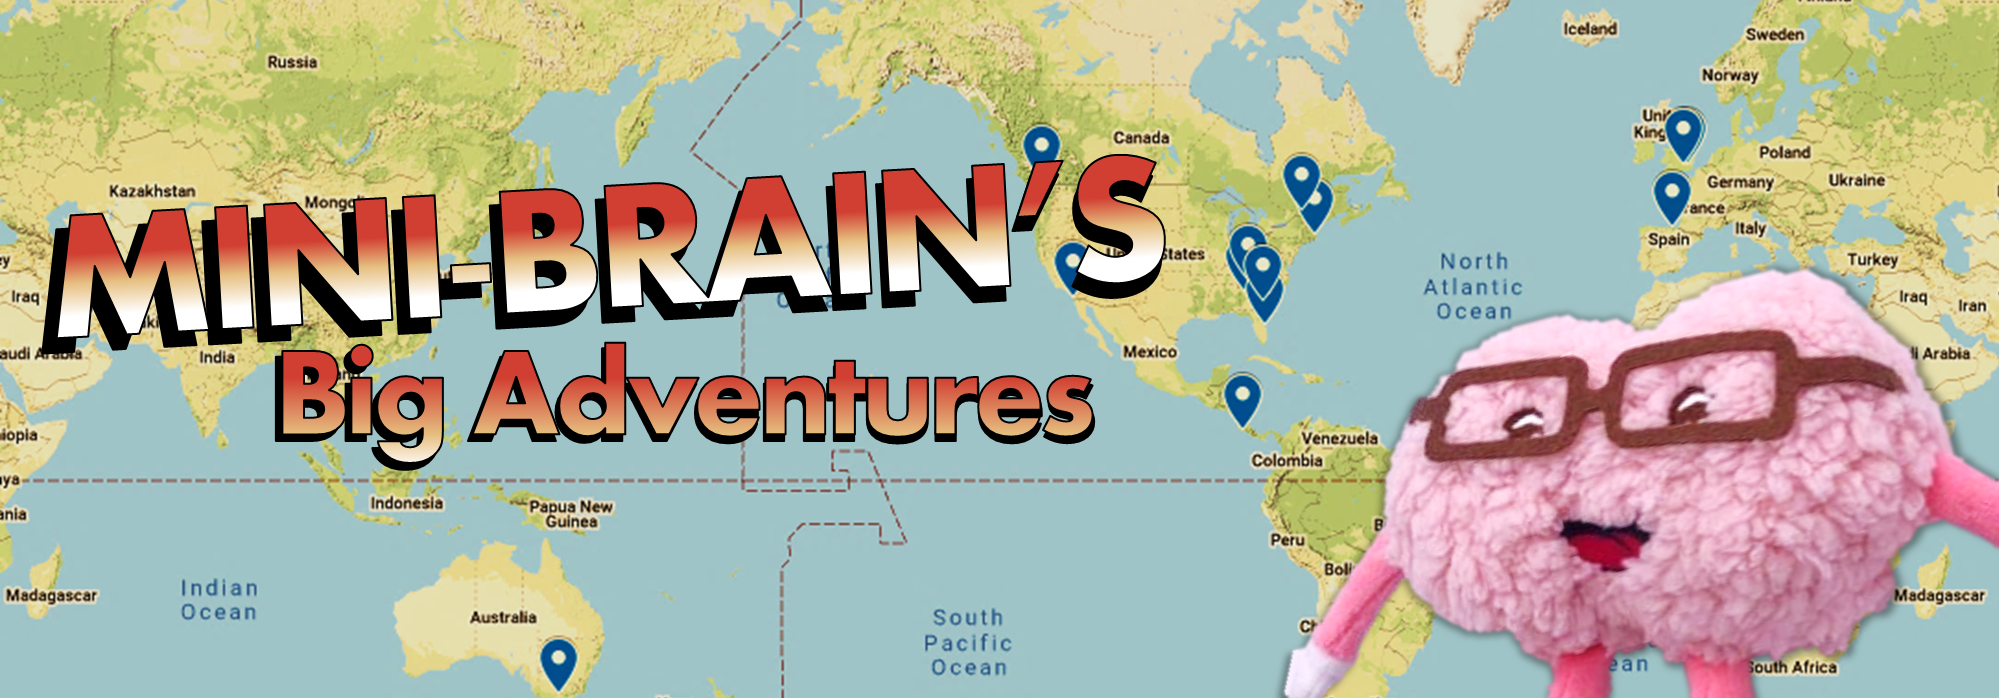 Mini-brain big adventure banner